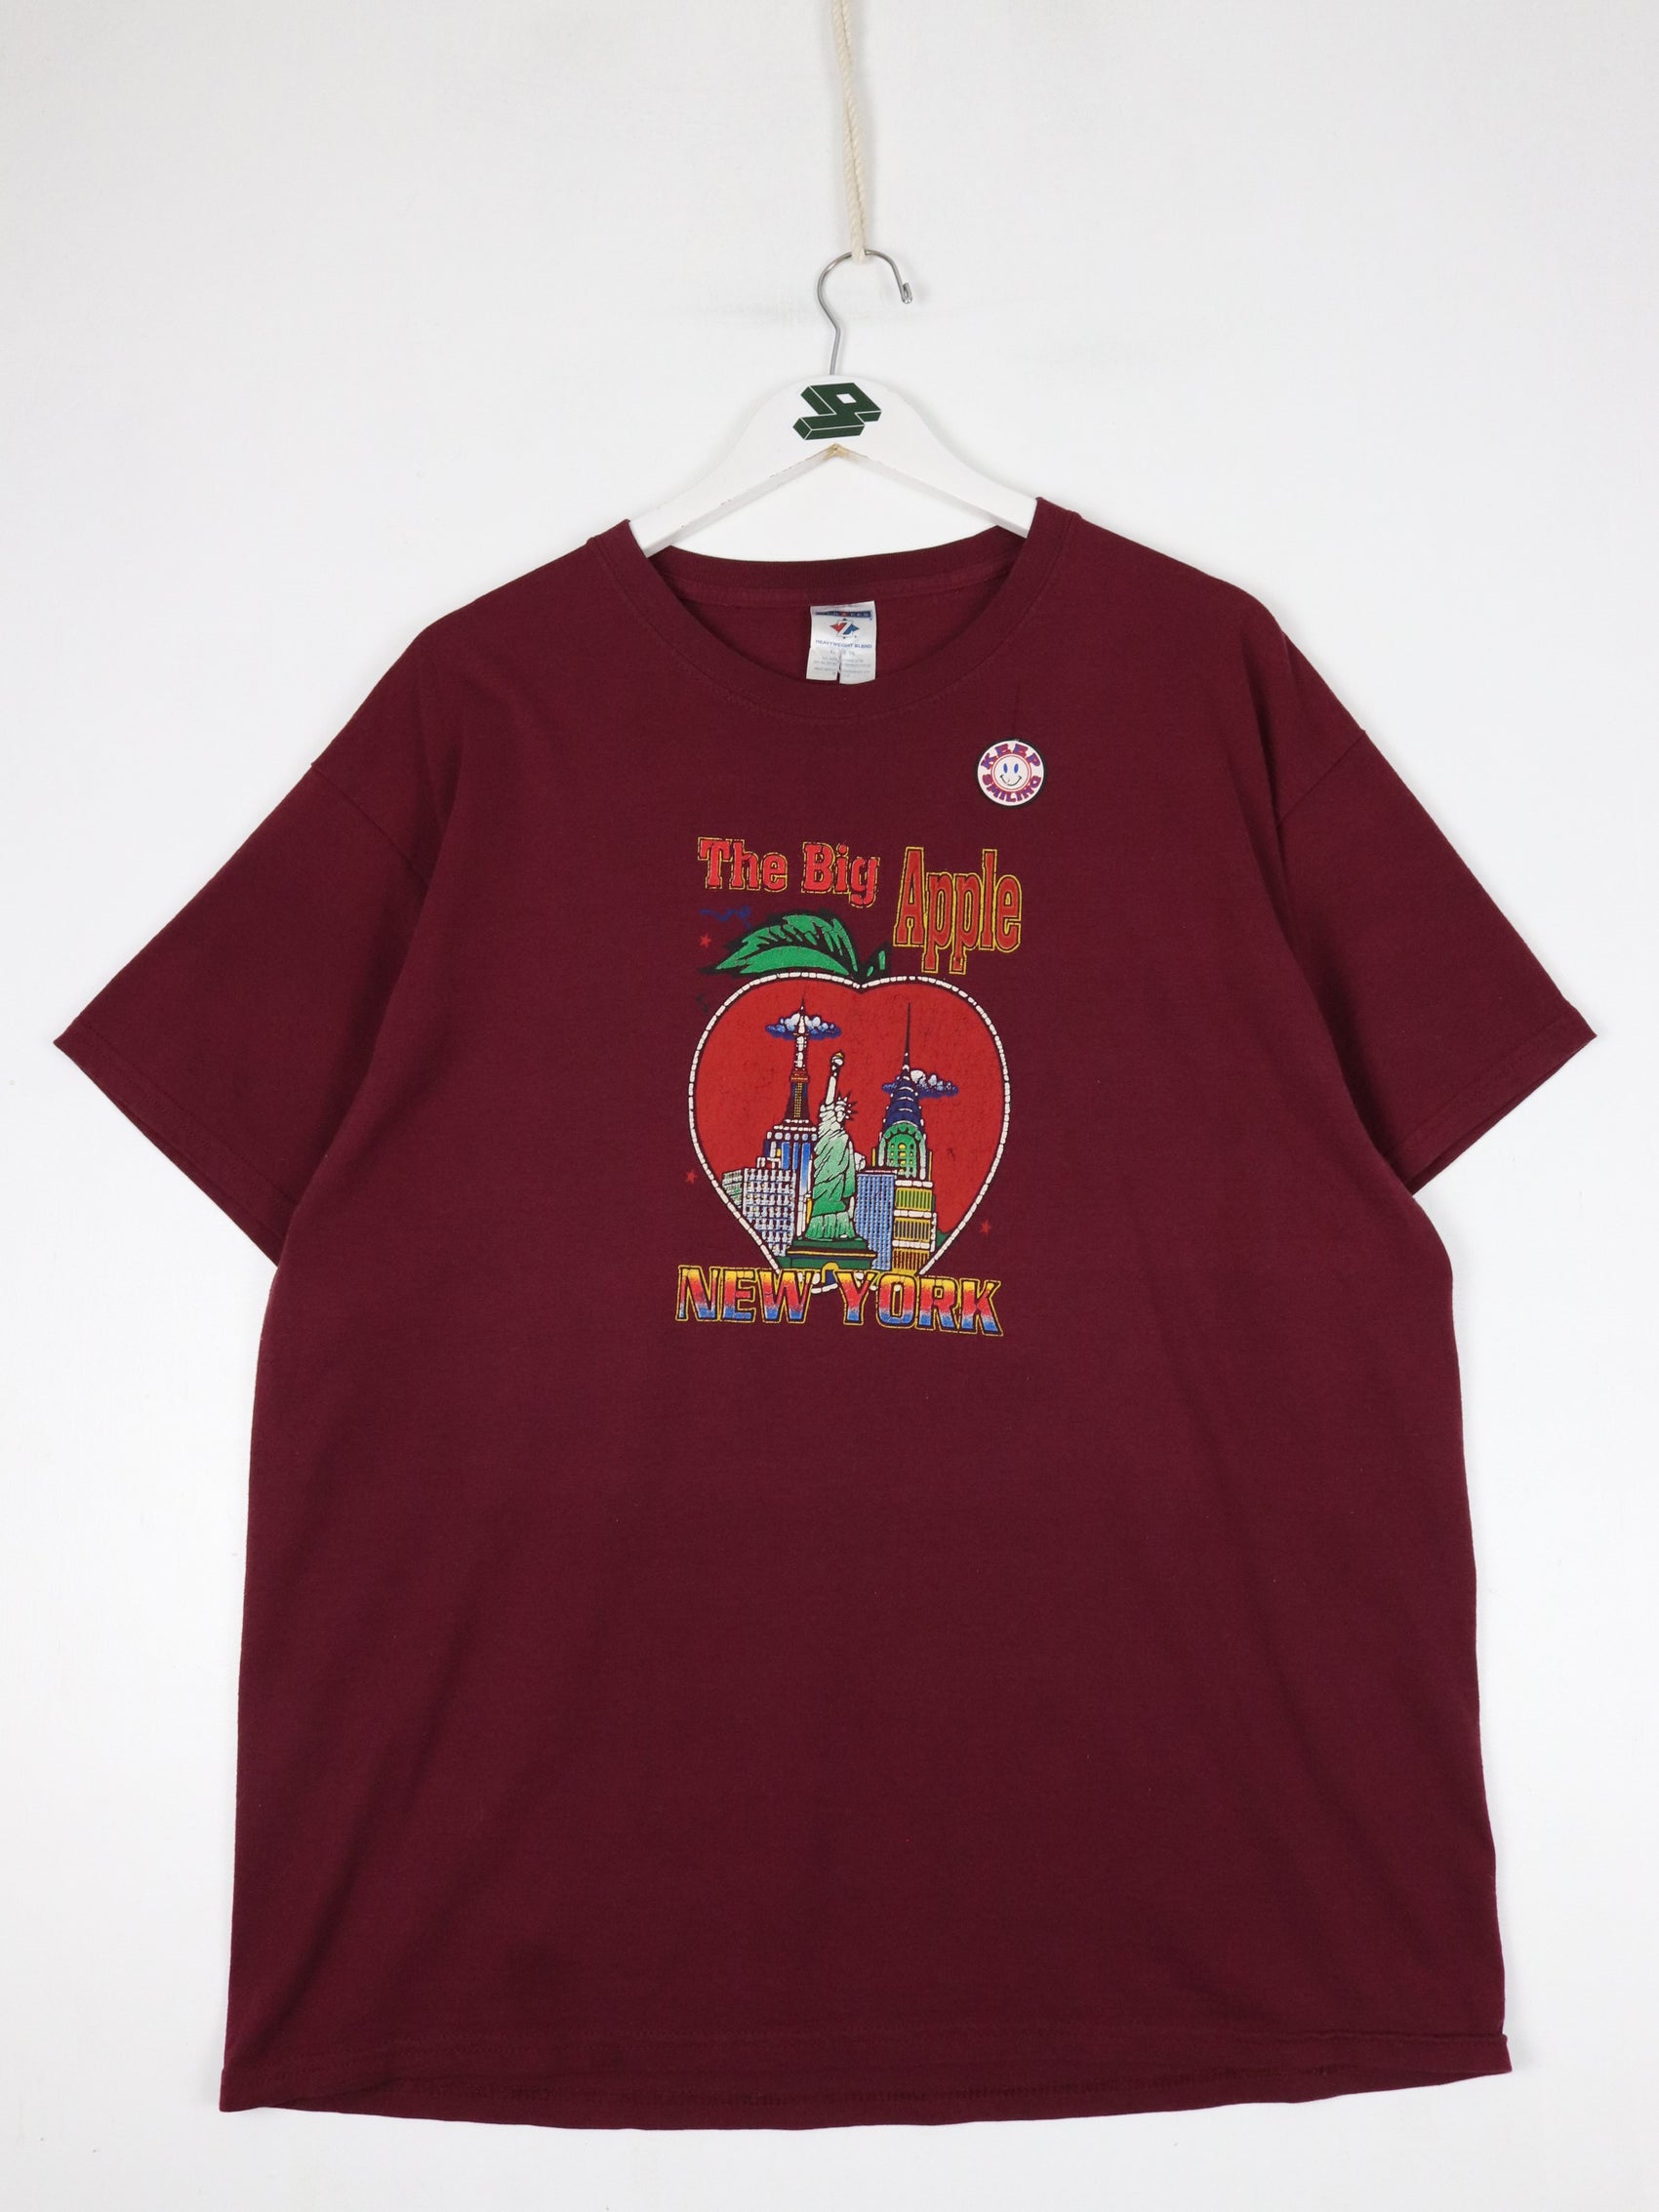 New York T Shirt Mens XL Red Big Apple